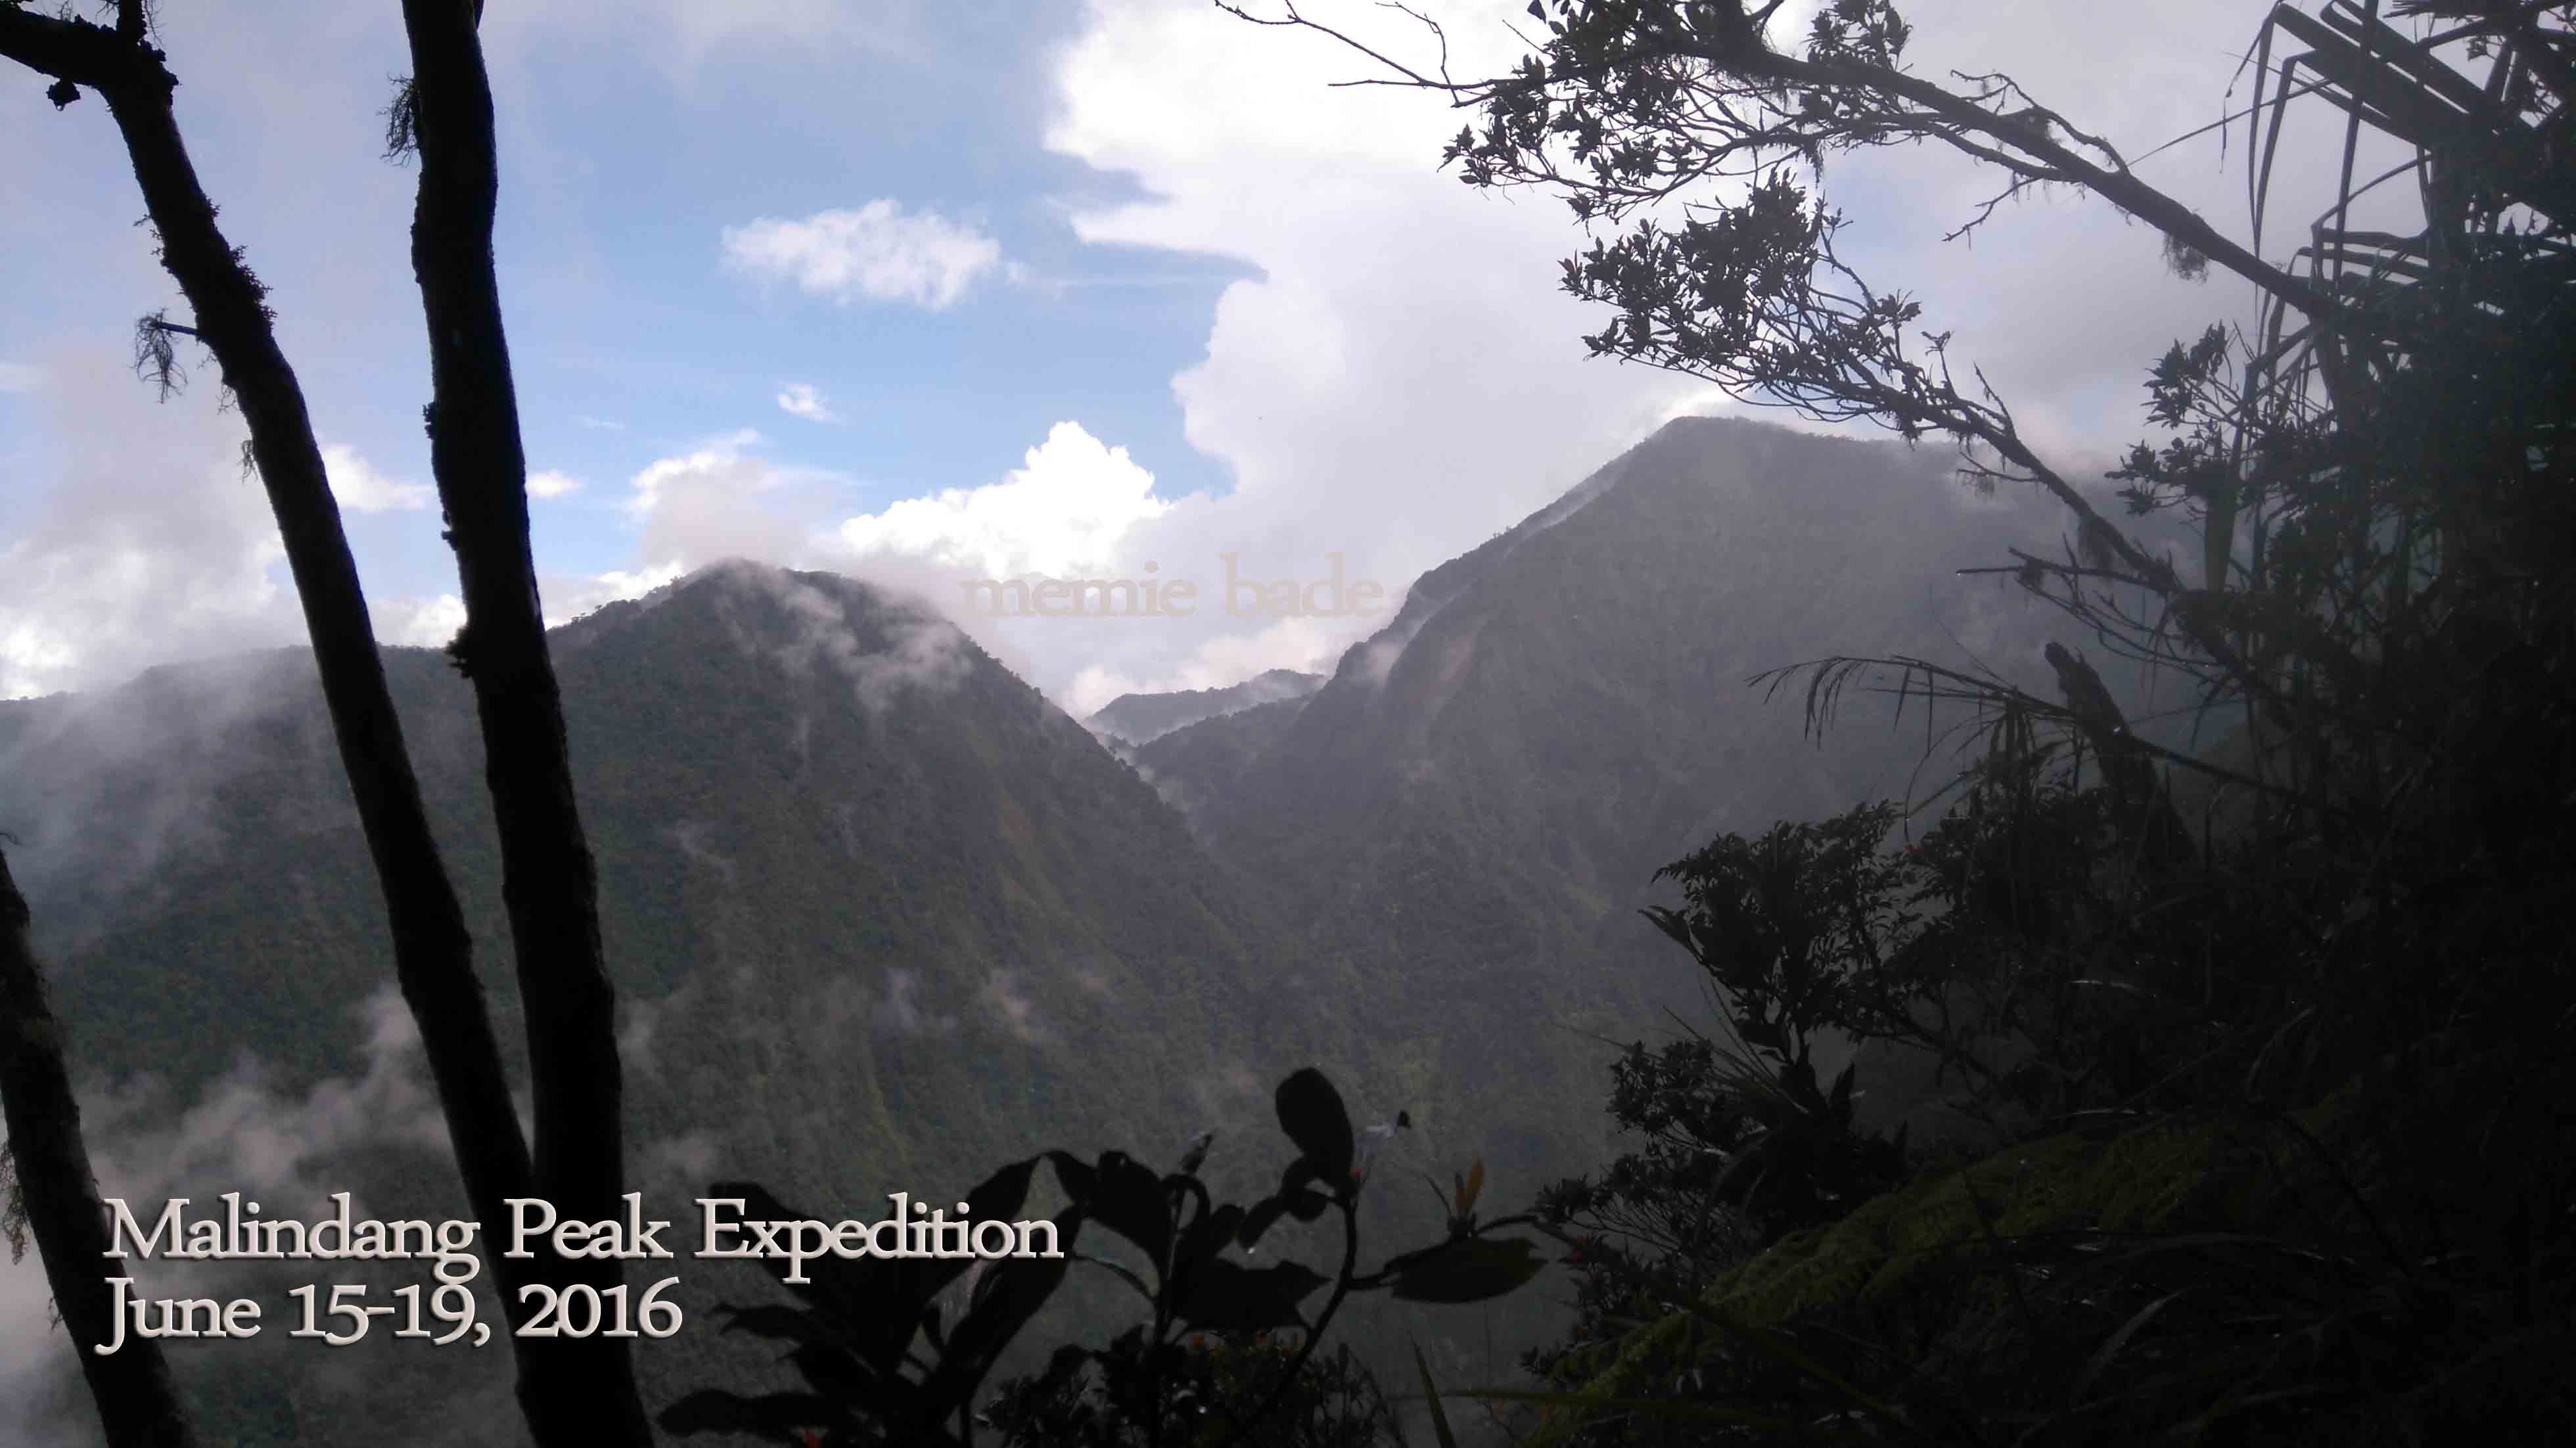 thephotos/2016/malindang peak expedition/DSC_1518.jpg